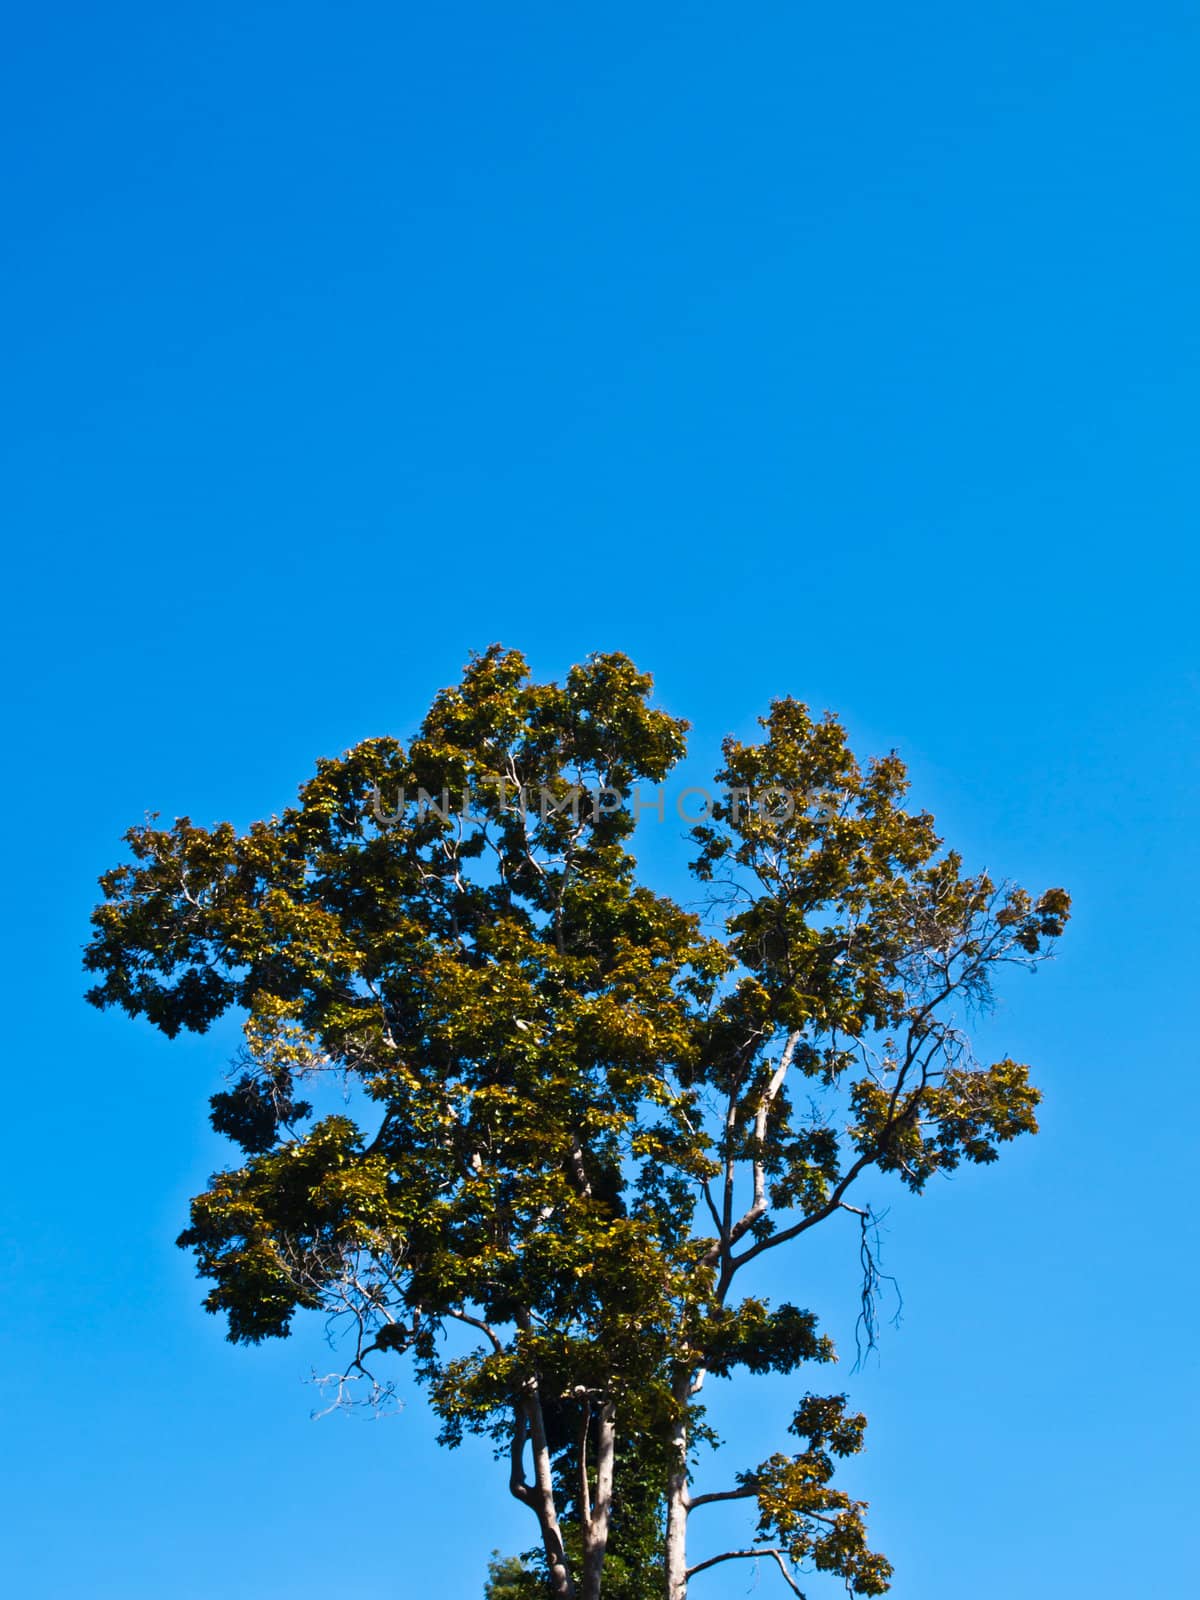 Tree on blue sky as background.